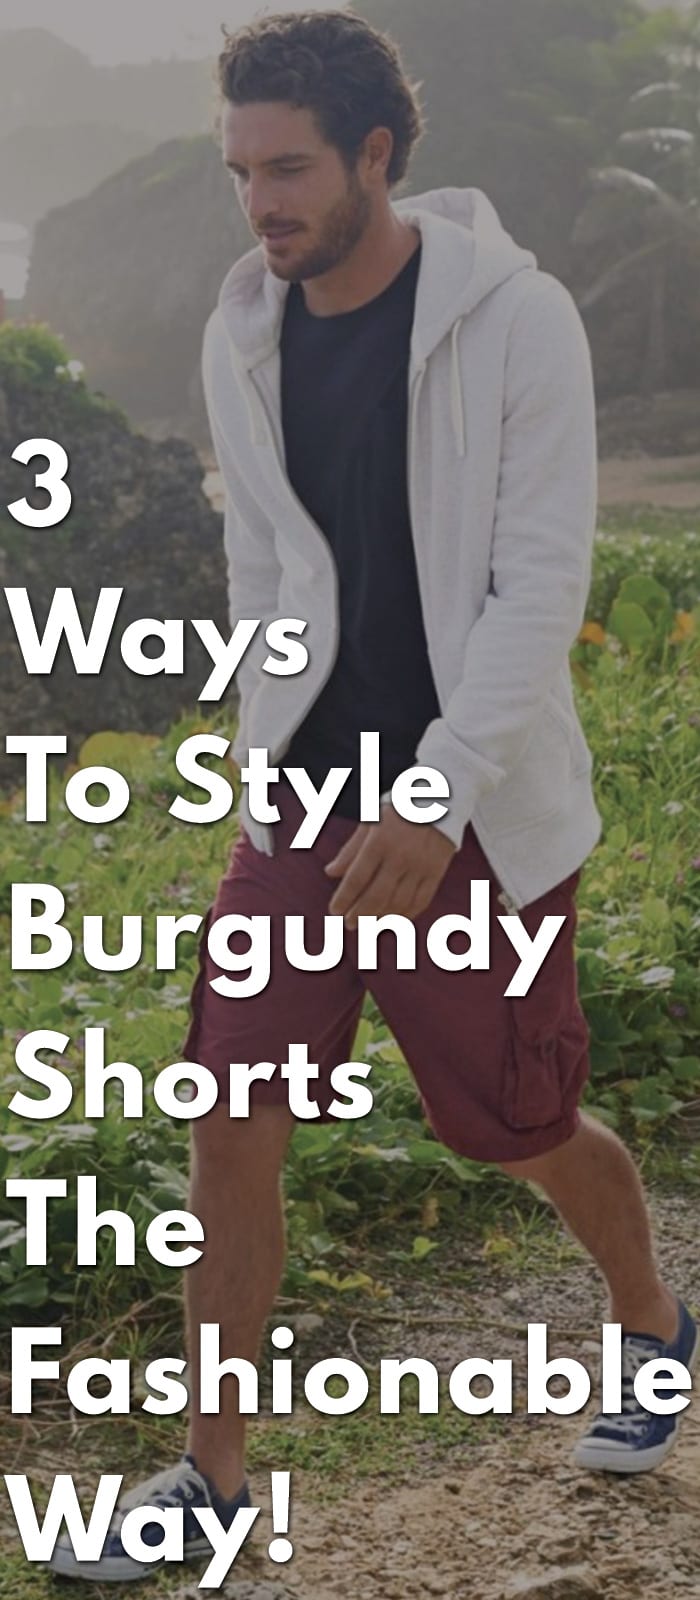 3-Ways-To-Style-Burgundy-Shorts-The-Fashionable-Way!